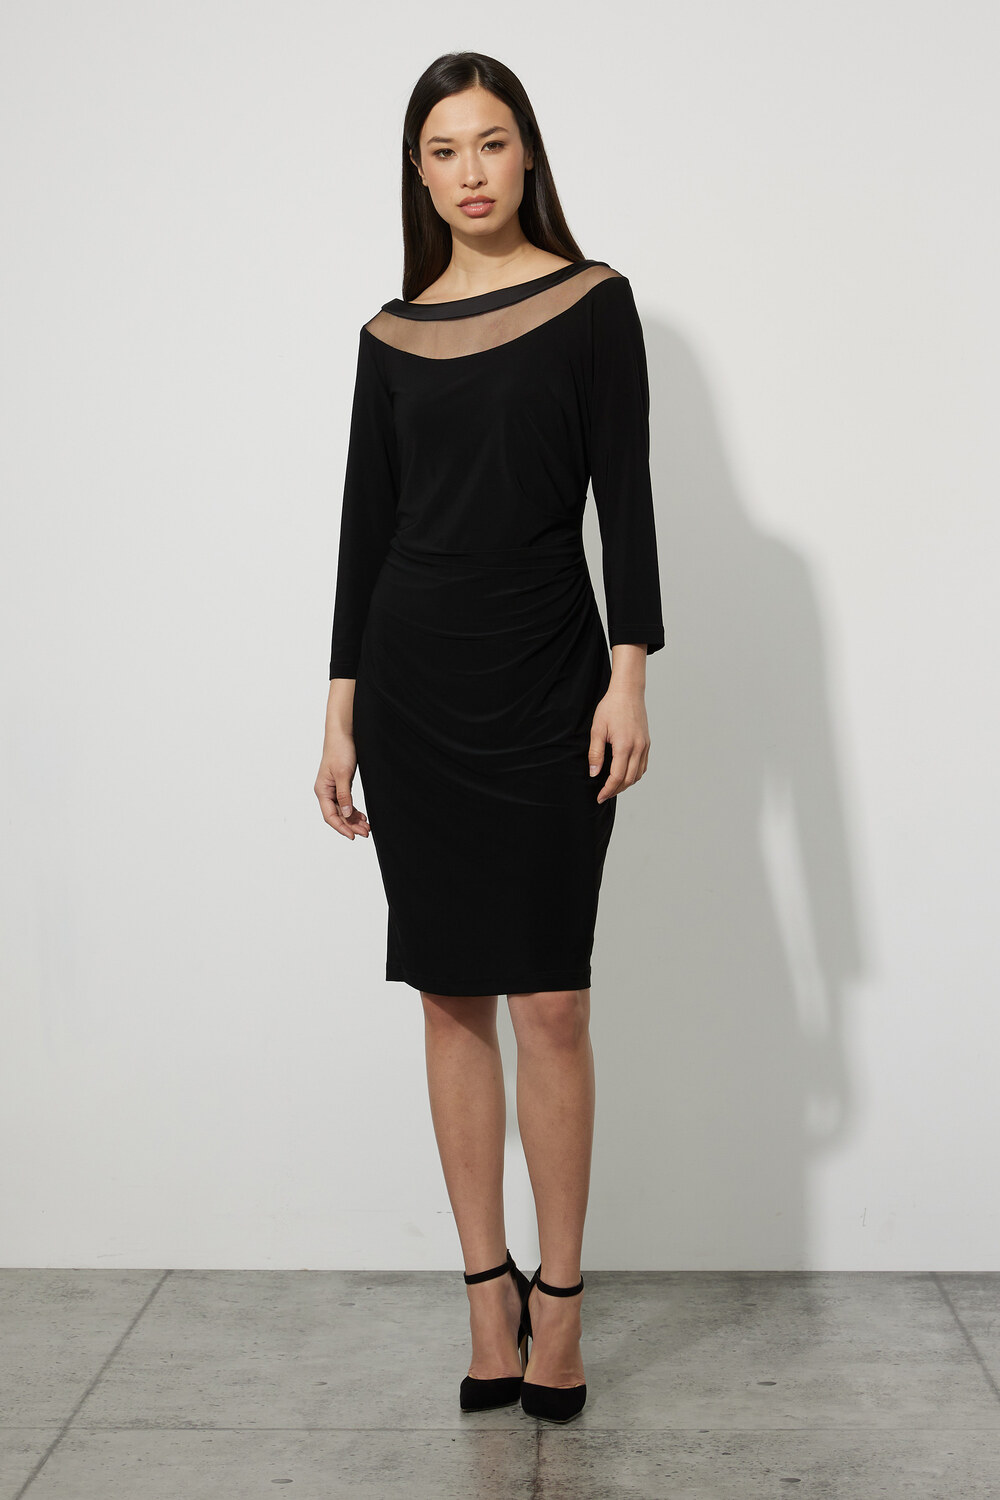 Joseph Ribkoff Sheer Neckline Dress Style 223747. Black